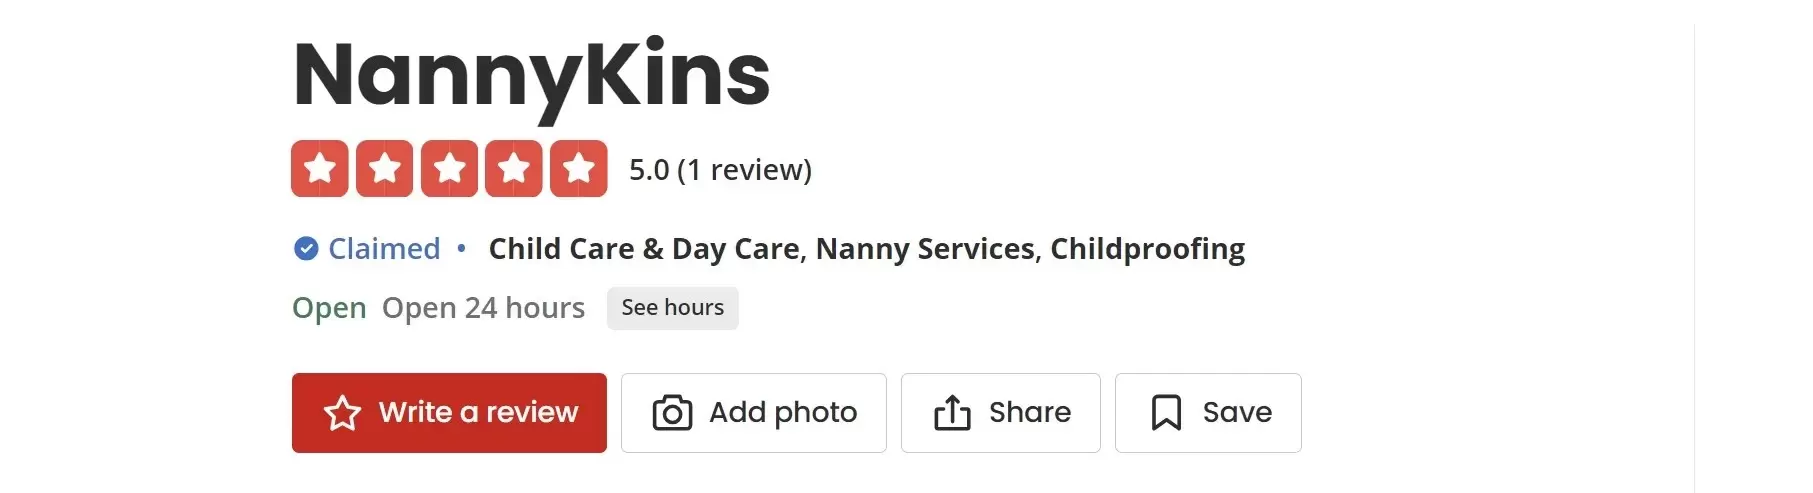 NannyKins Yelp page